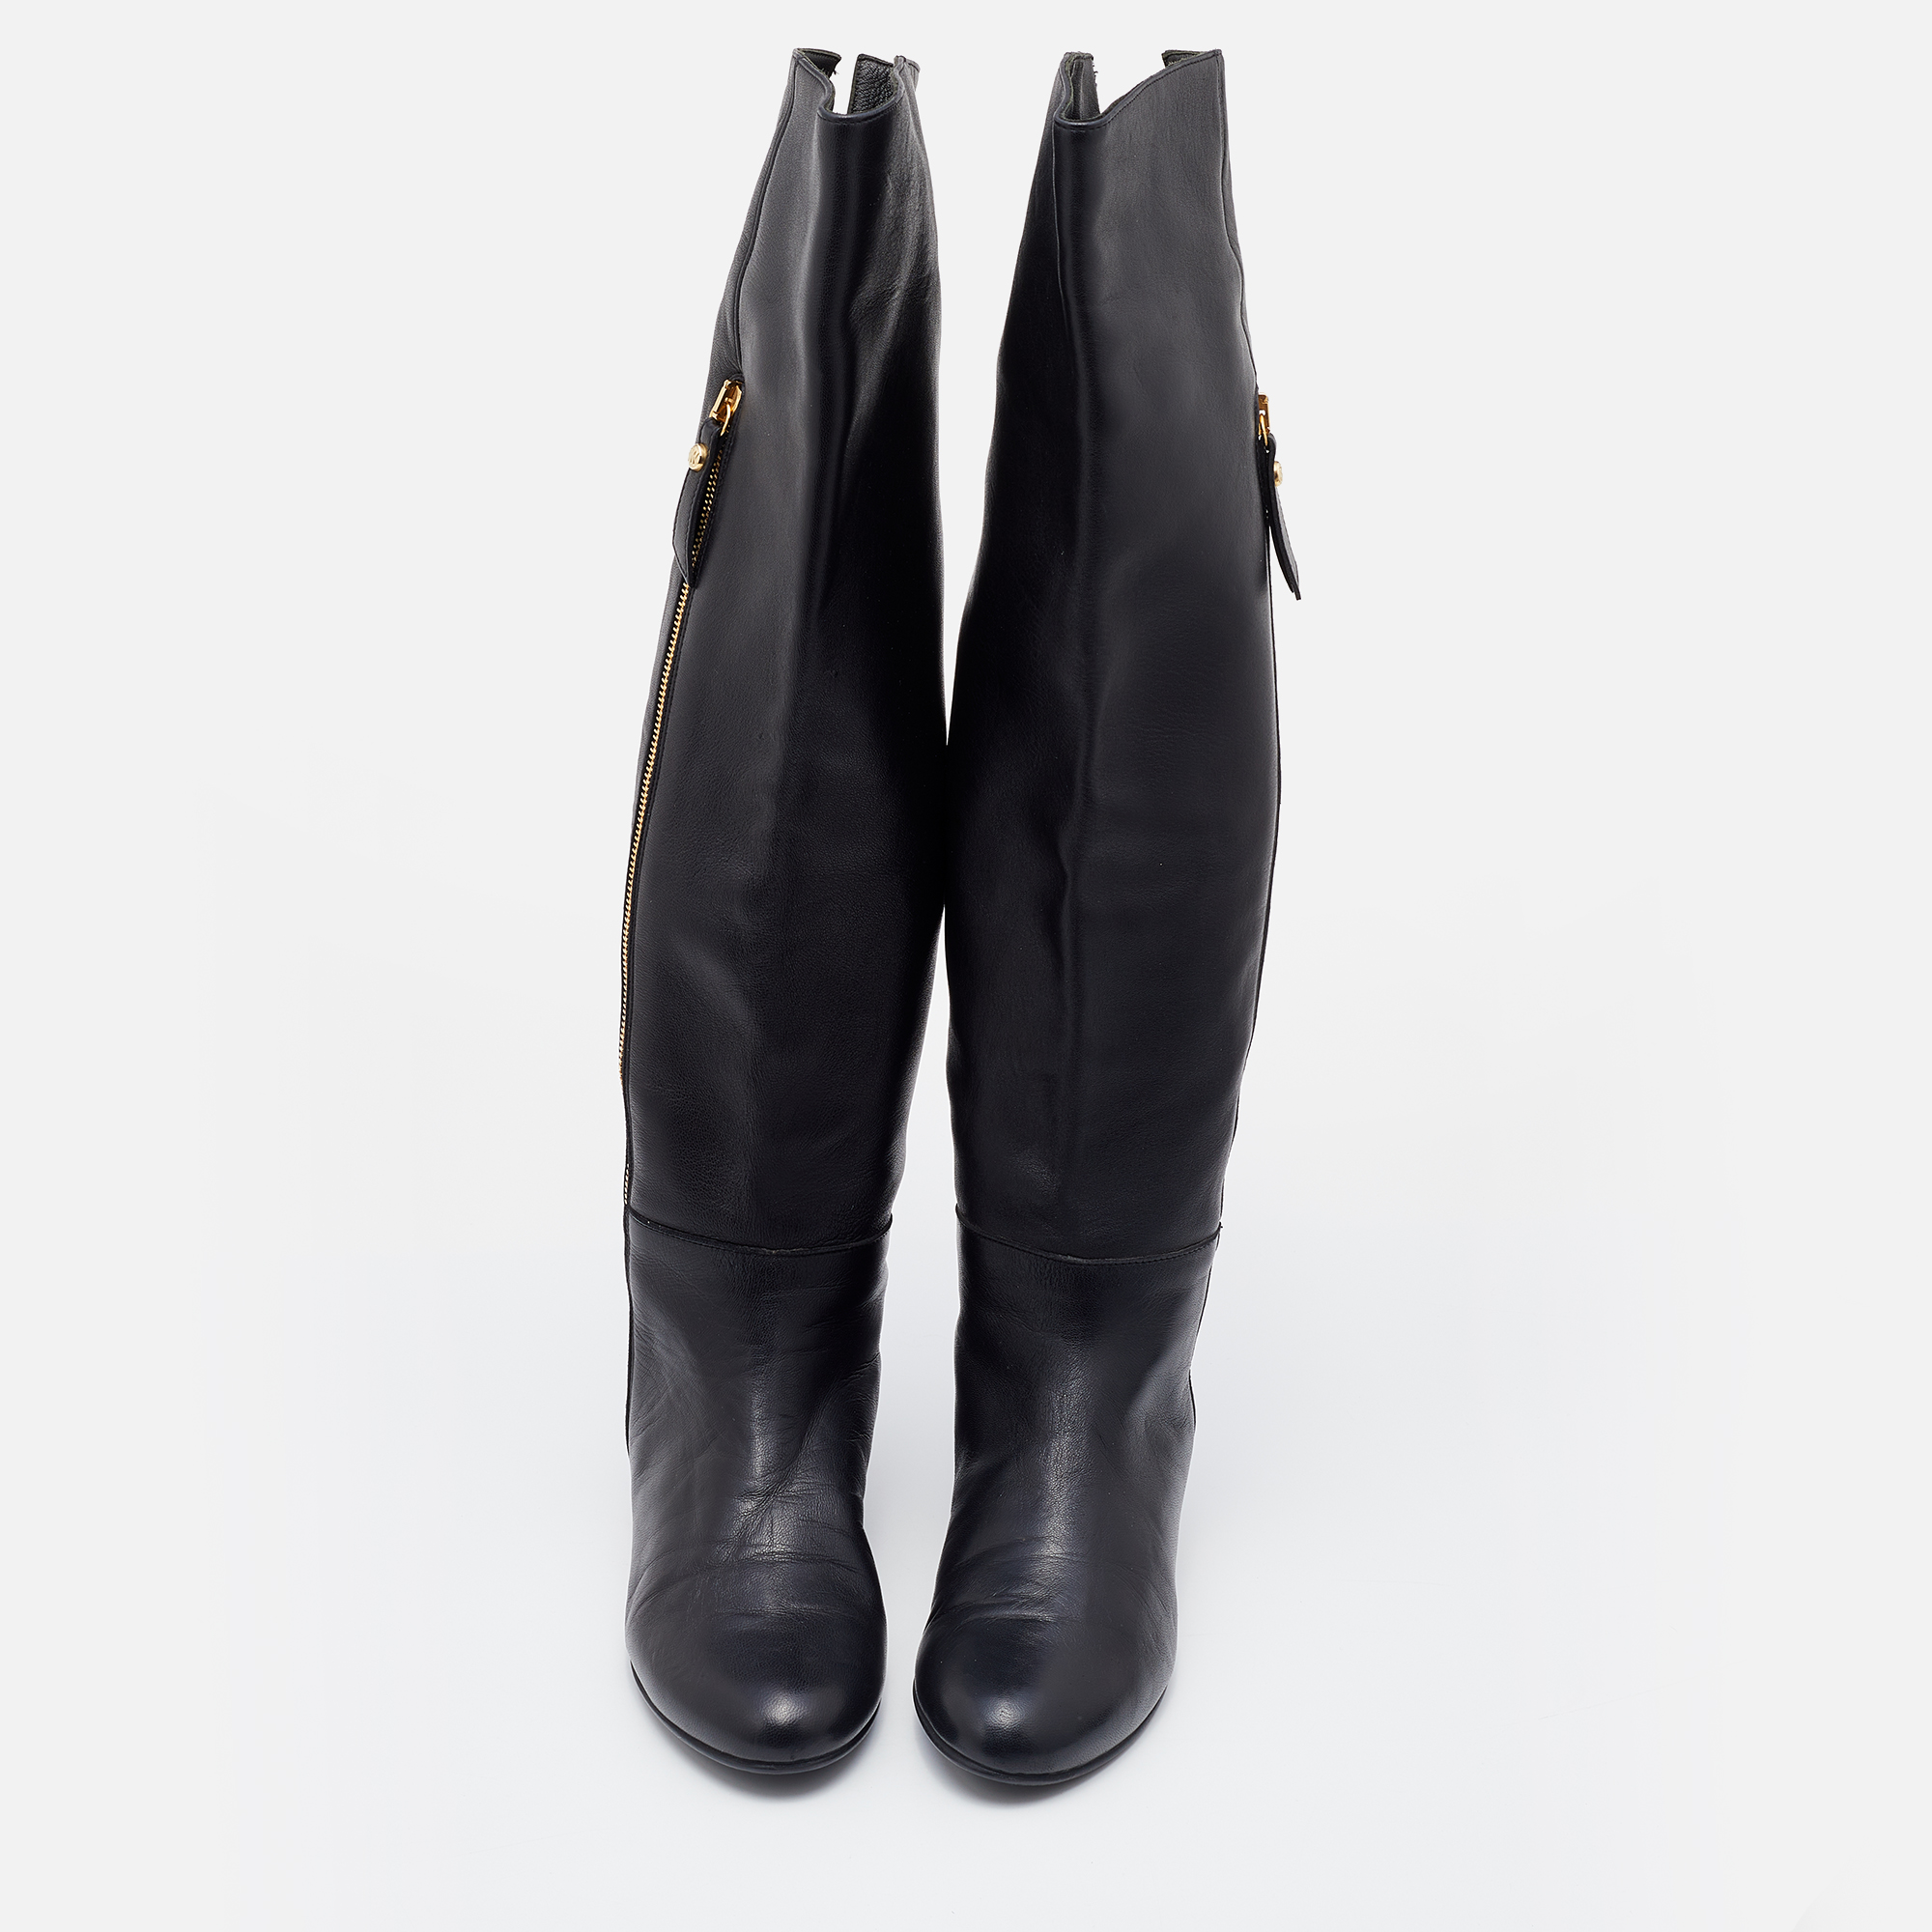 Stuart Weitzman Black Leather Knee Length Boots Size 34.5